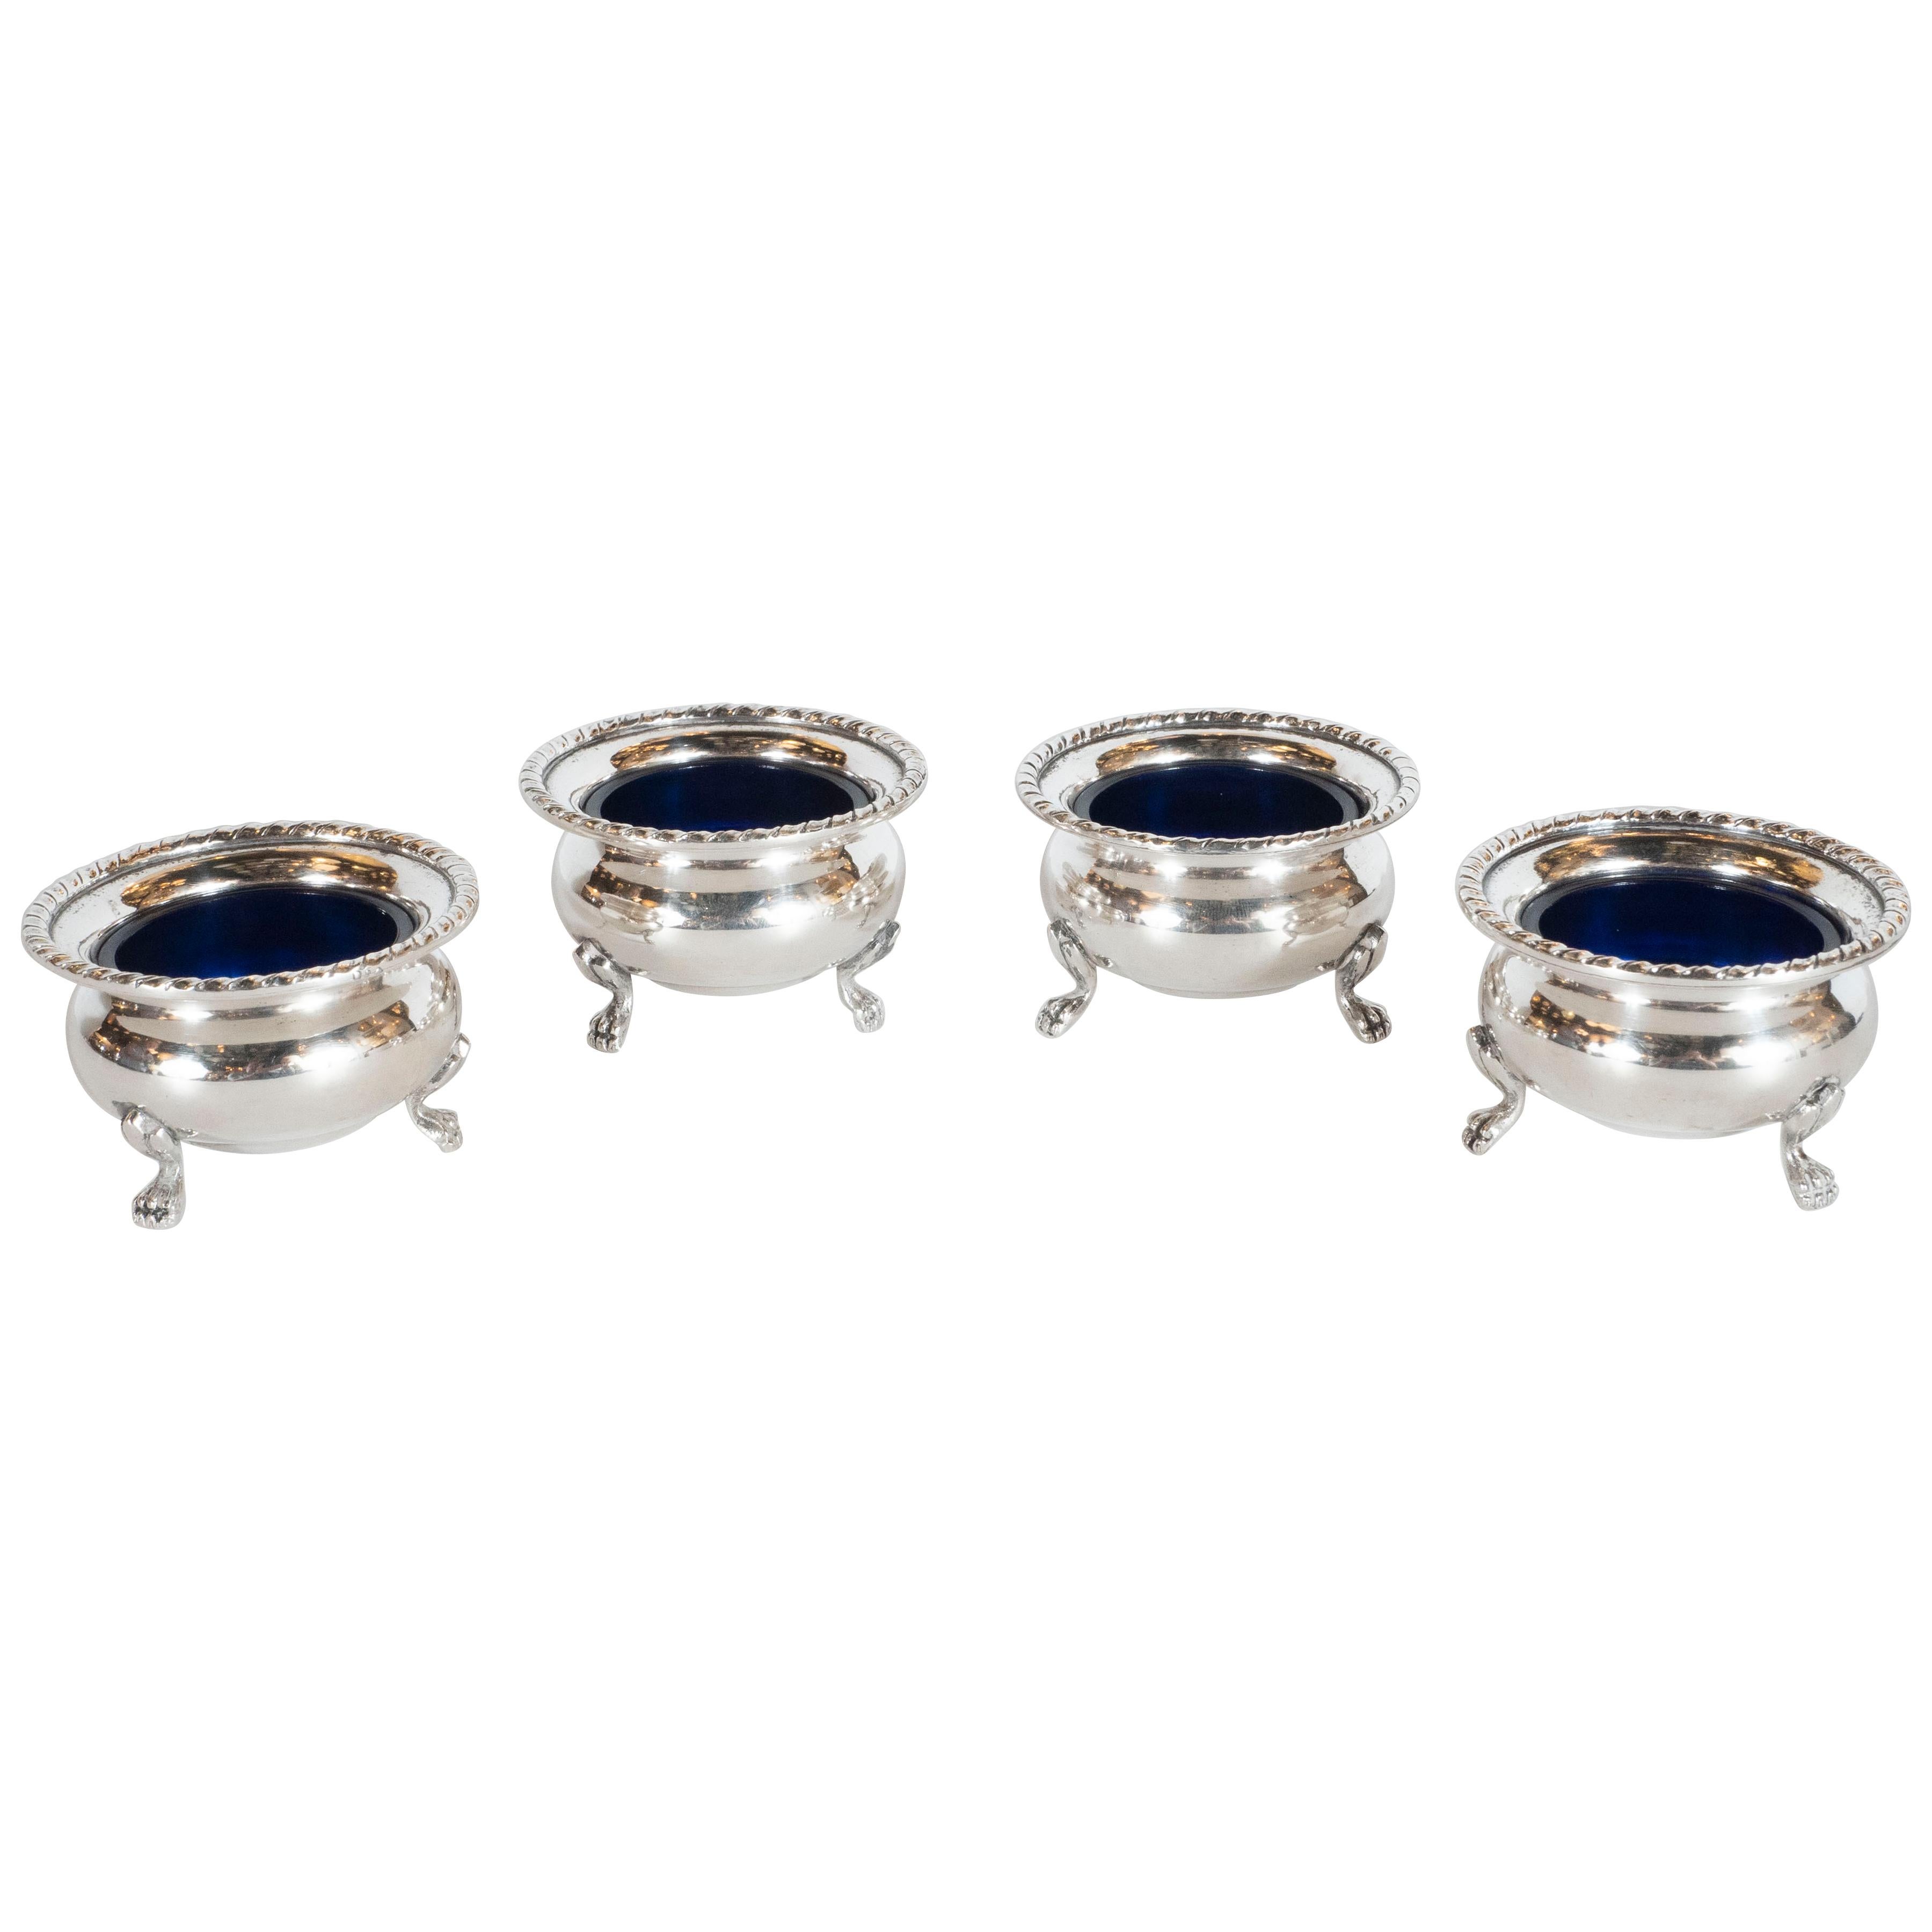 Set of 4 Mid-Century Modern Silver Salt Cellars with Cobalt Blue Glass Inserts